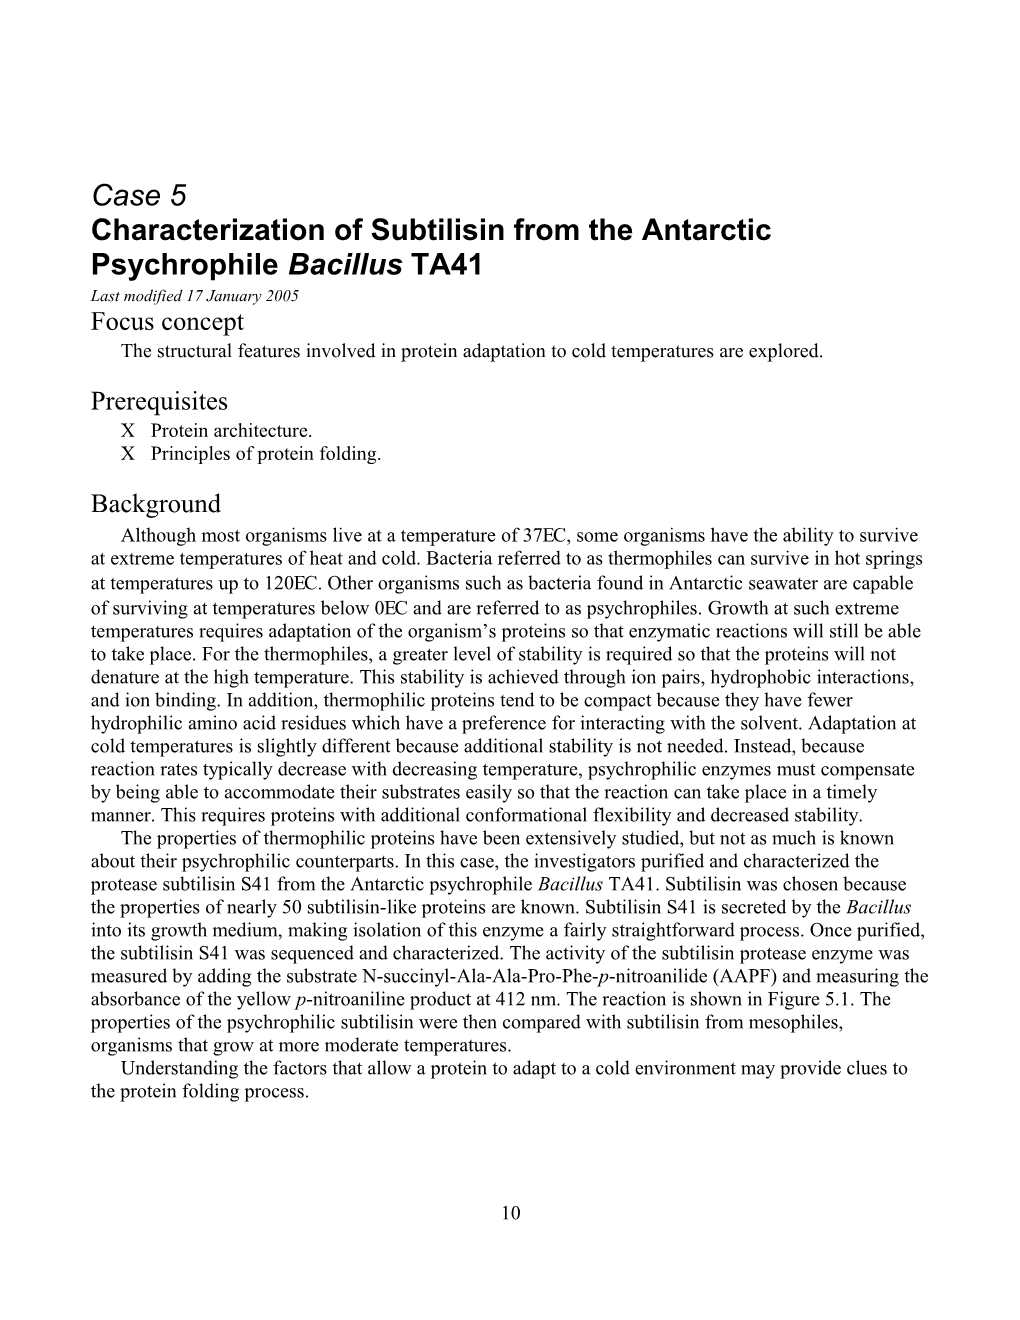 Characterization of Subtilisin from the Antarctic Psychrophile Bacillus TA41